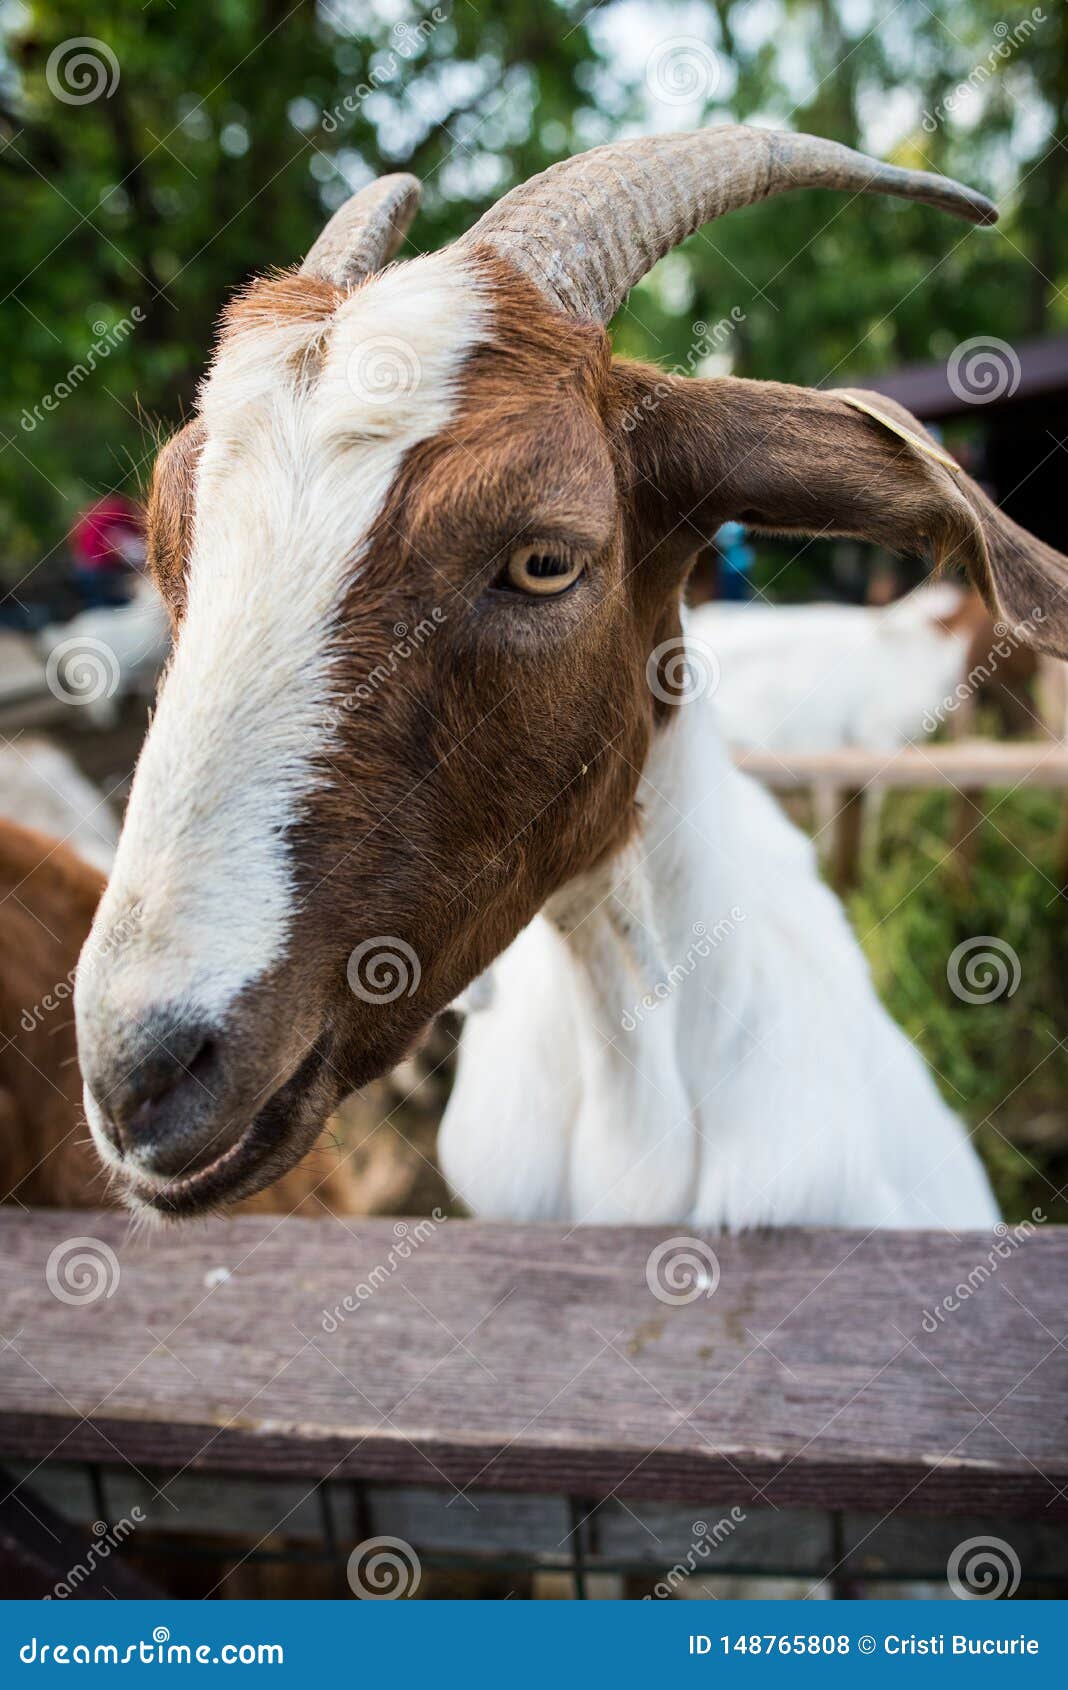 expressive goat portrait